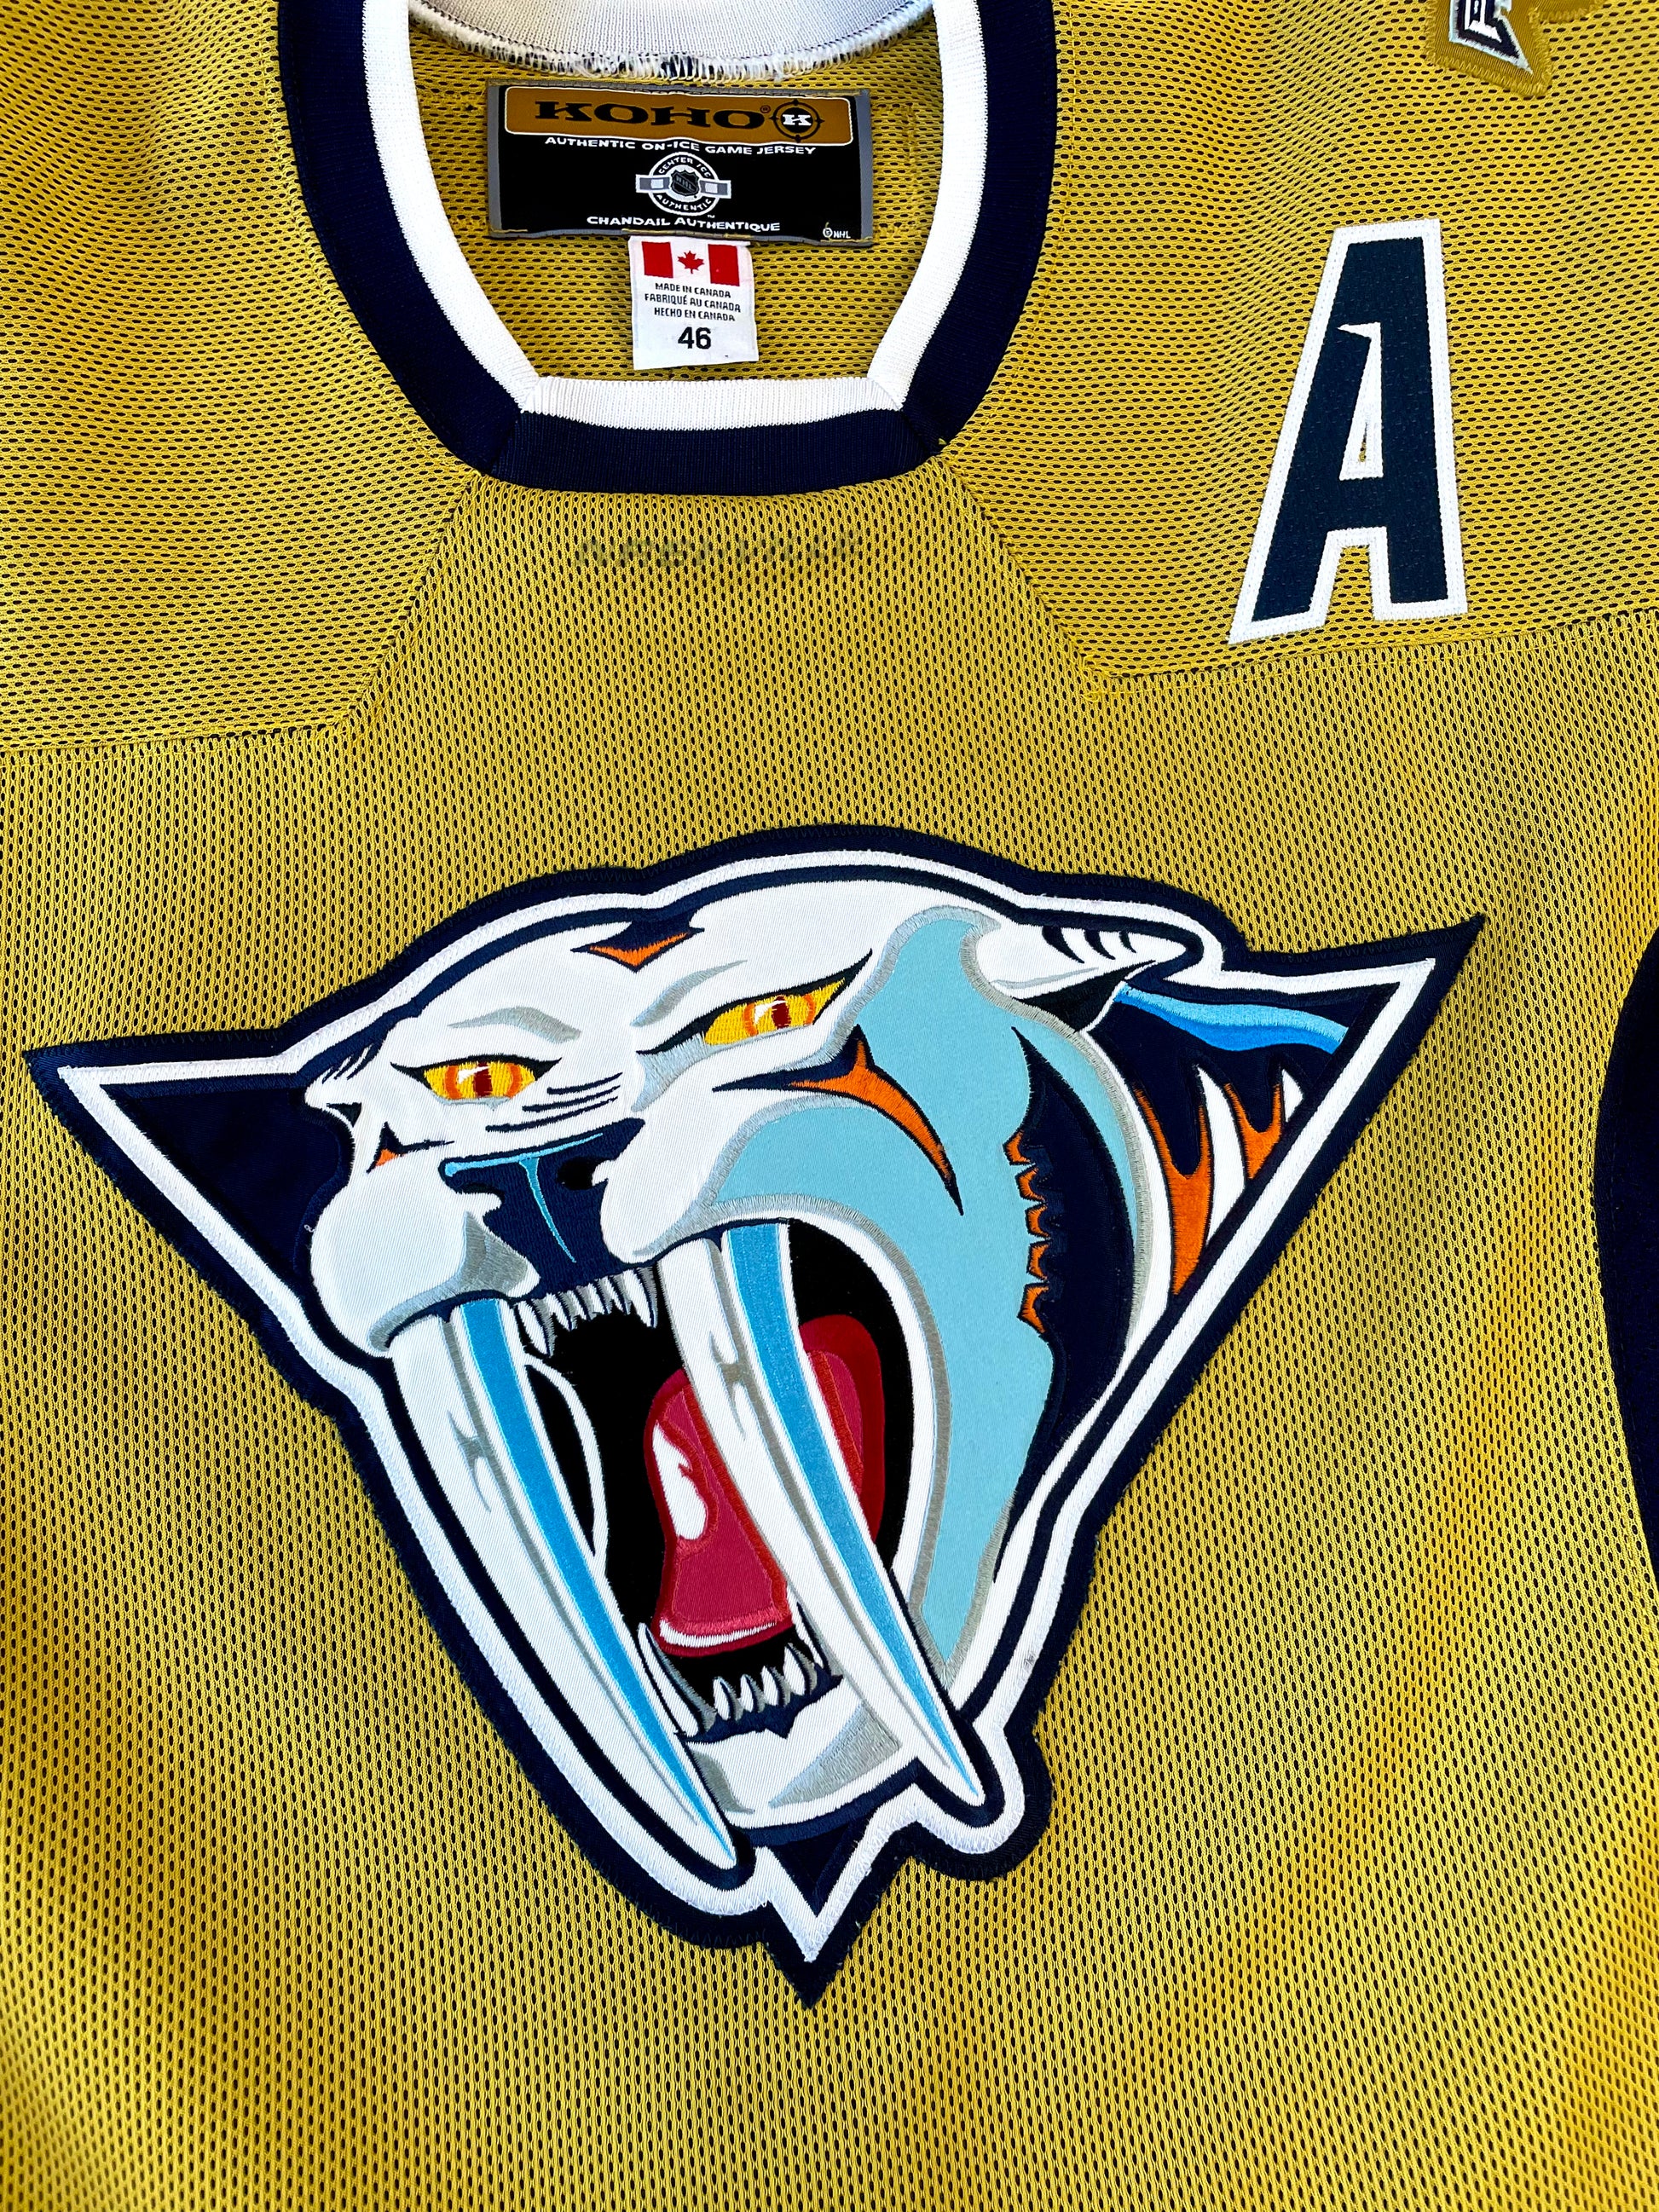 Nashville Predators 2003-04 Kimmo Timonen “Mustard Cat” Hockey Jersey  (46/Small)